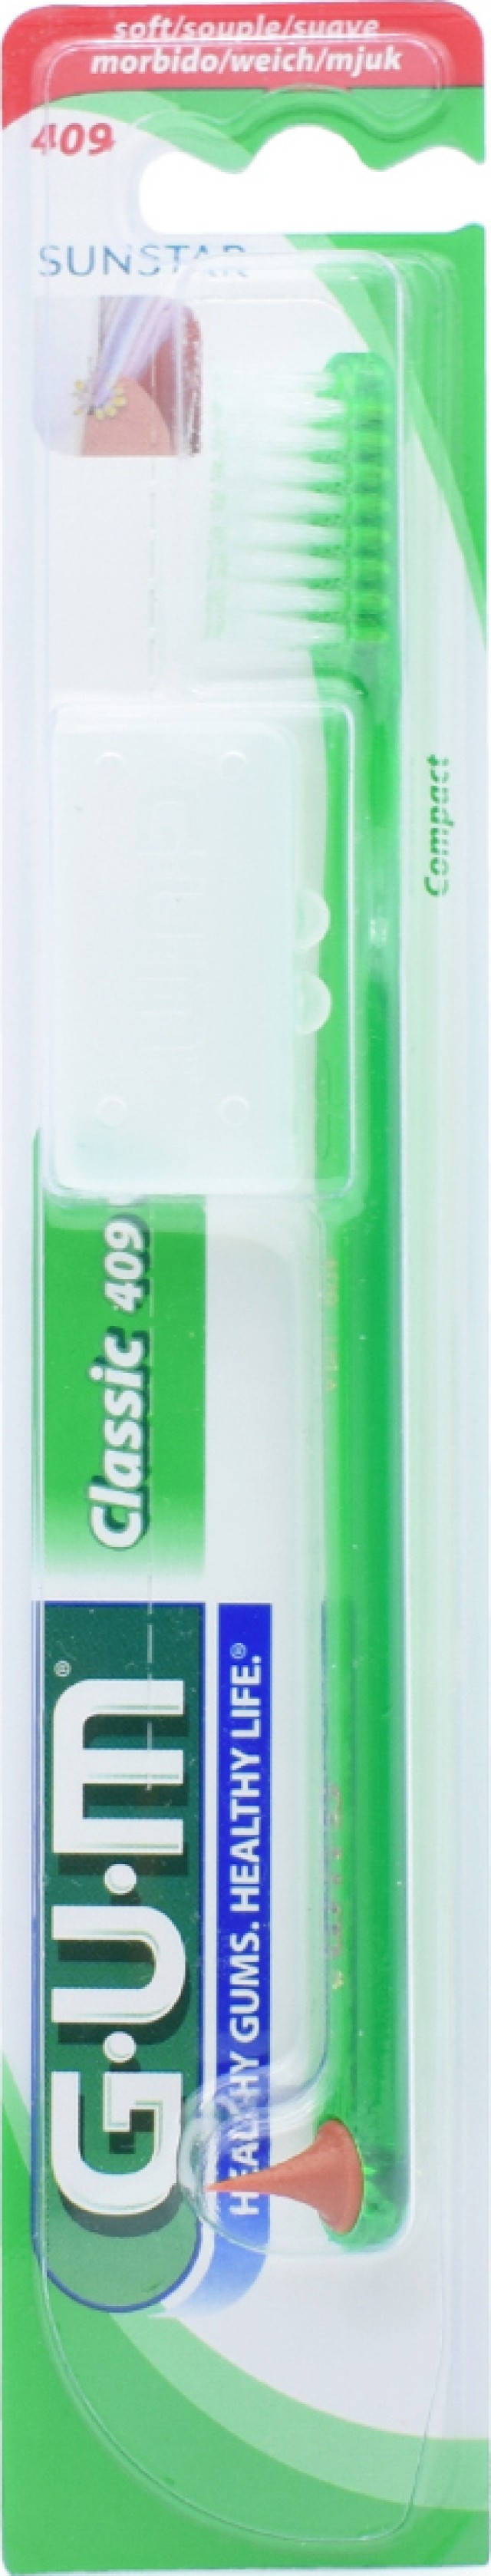 GUM Classic Compact 409 Soft Οδοντόβουρτσα, 1τχμ